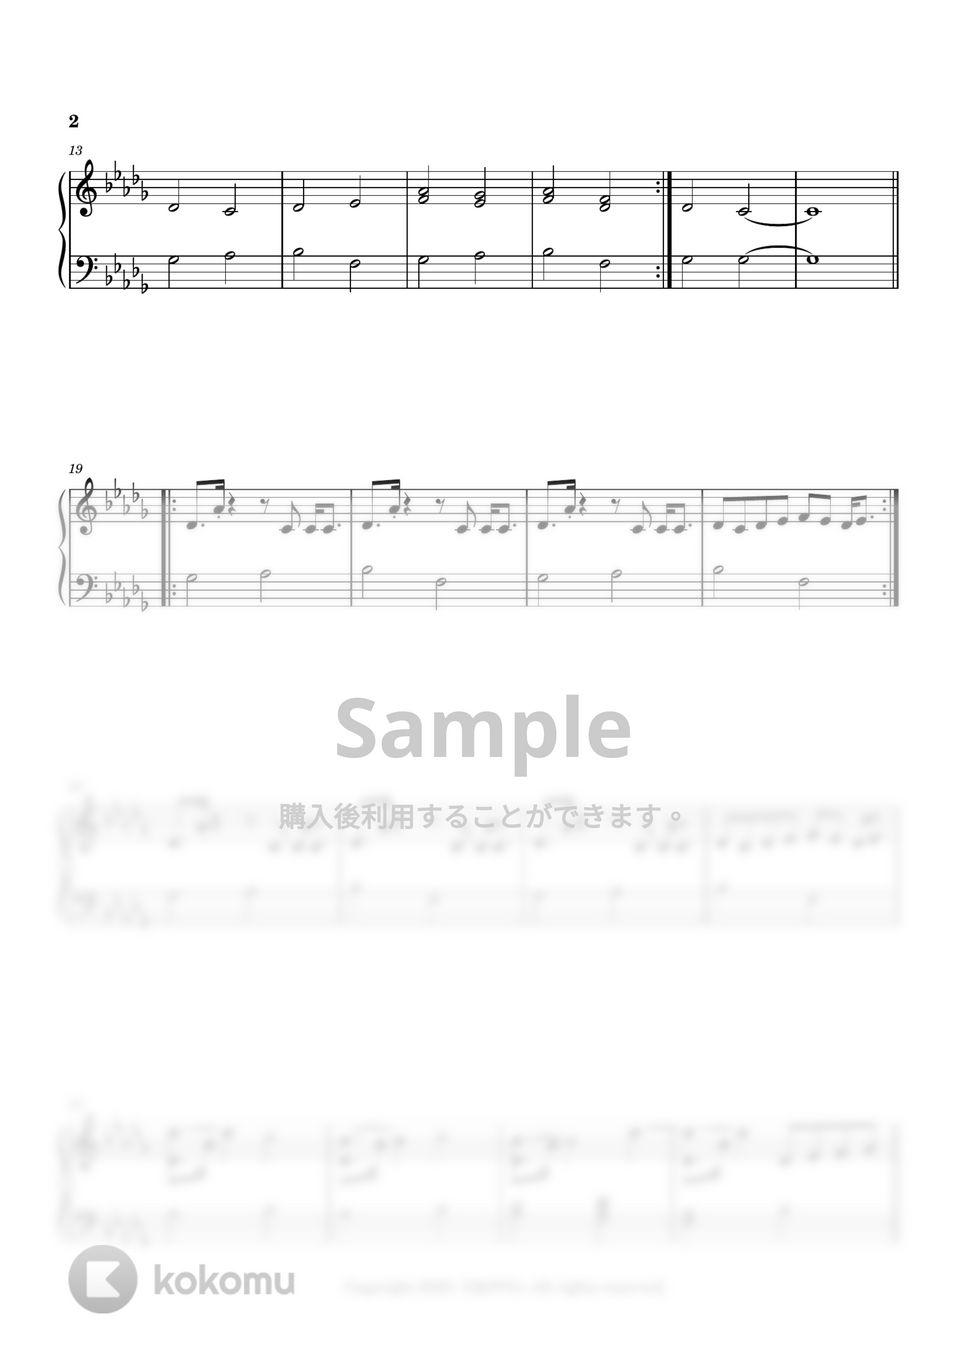 Seiji Kameda - 知らない男の子 (今夜、世界からこの恋が消えても track 11) by 今日ピアノ(Oneul Piano)